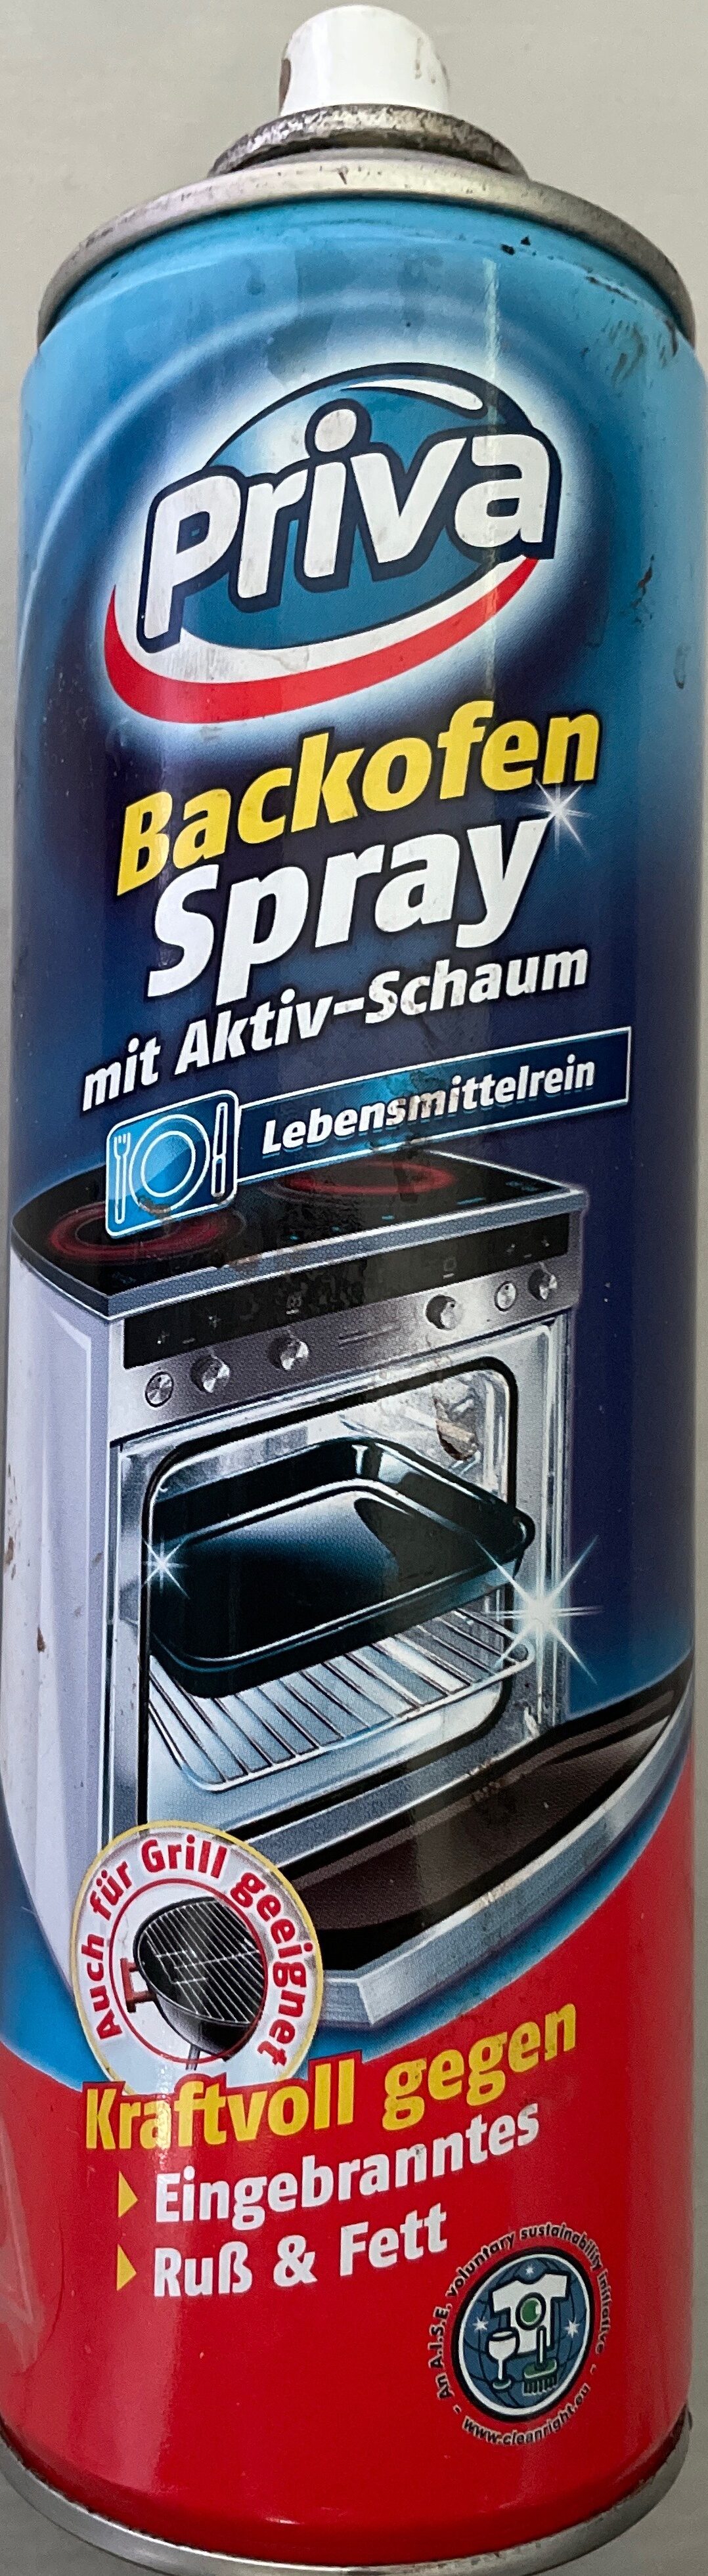 Backofenspray mit Aktiv-Schaum - Product - de